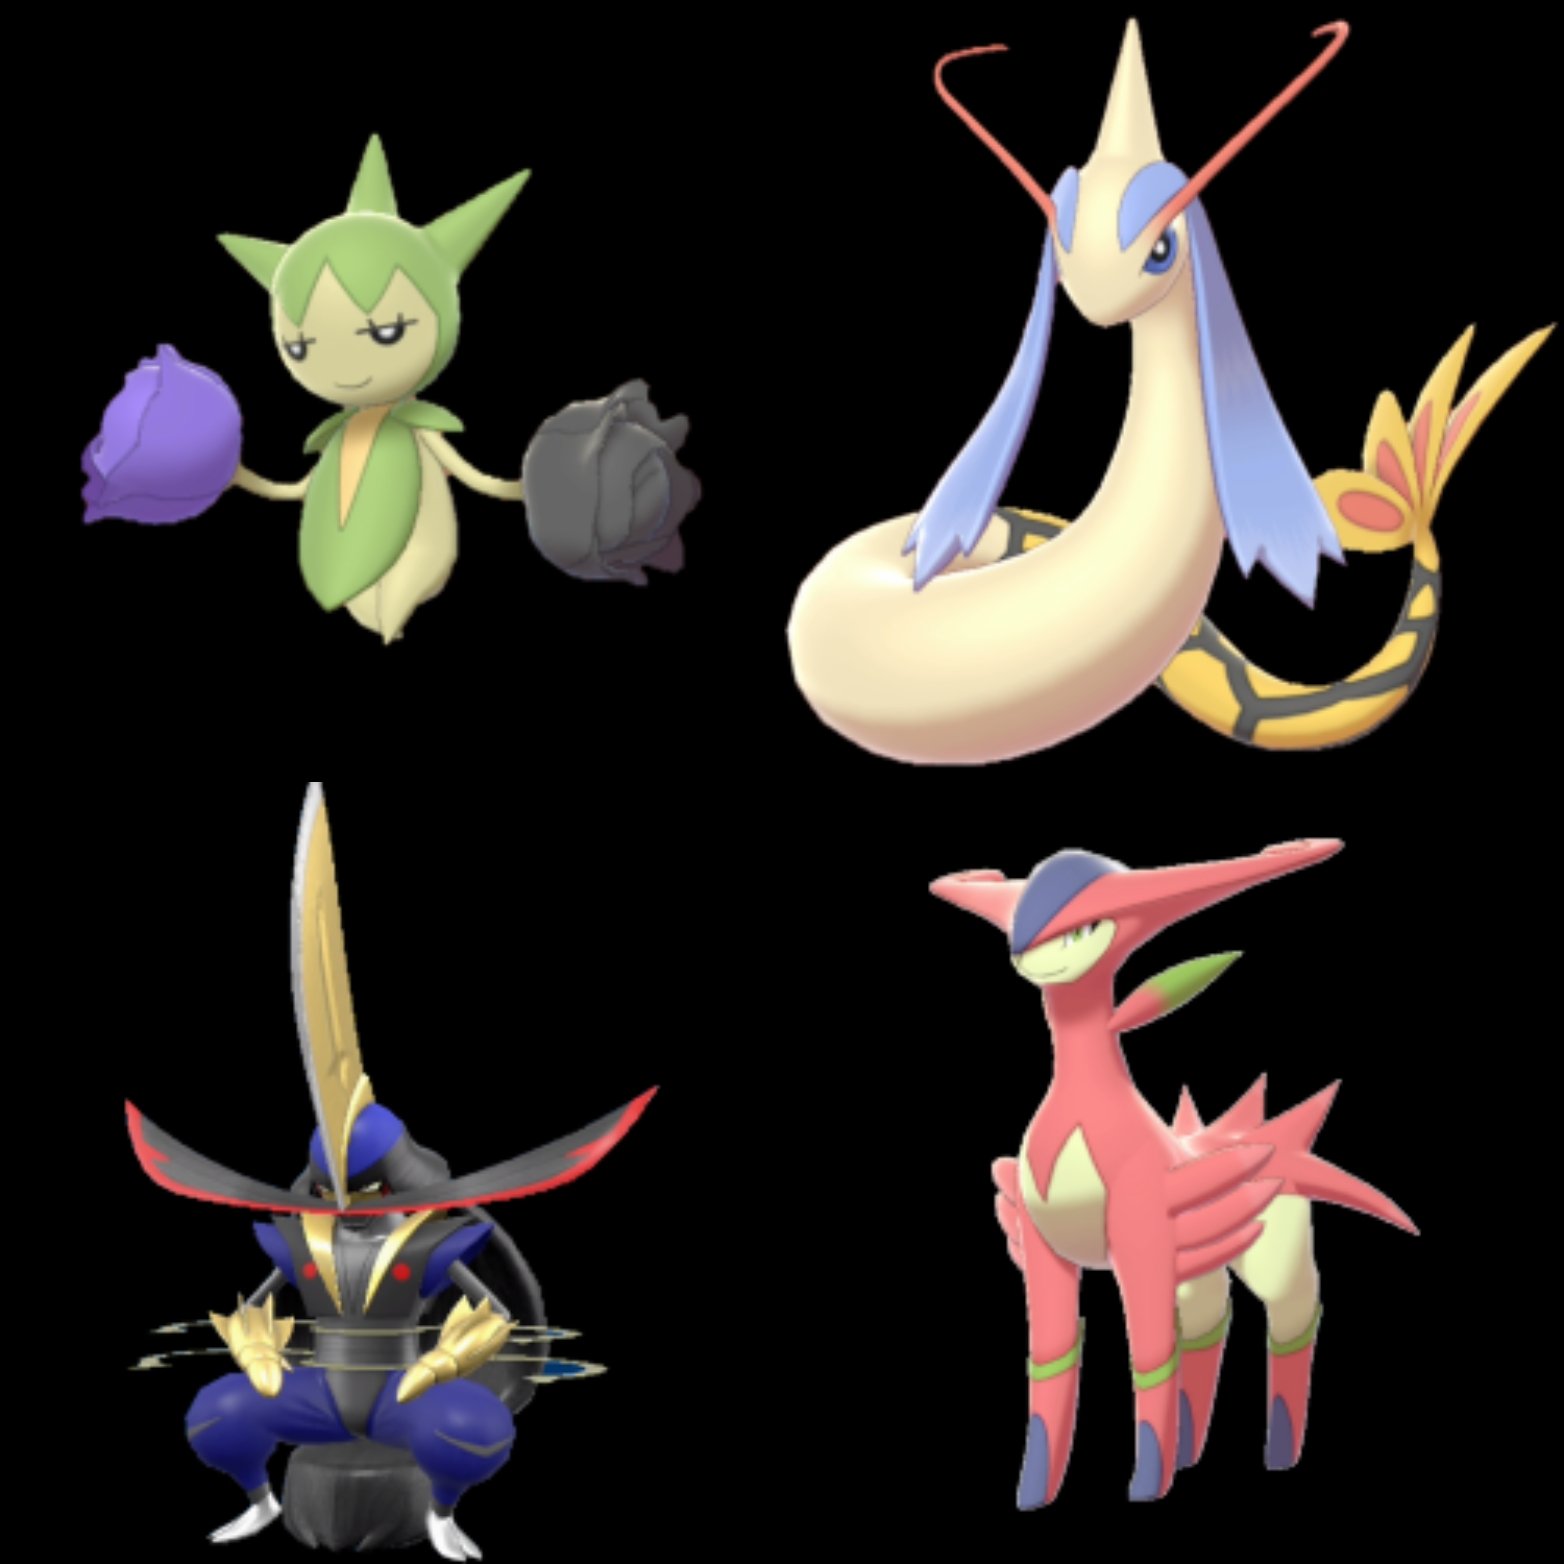 SHINY CATHERINE 🥸 on X: These are my top 4 shiny Pokémon